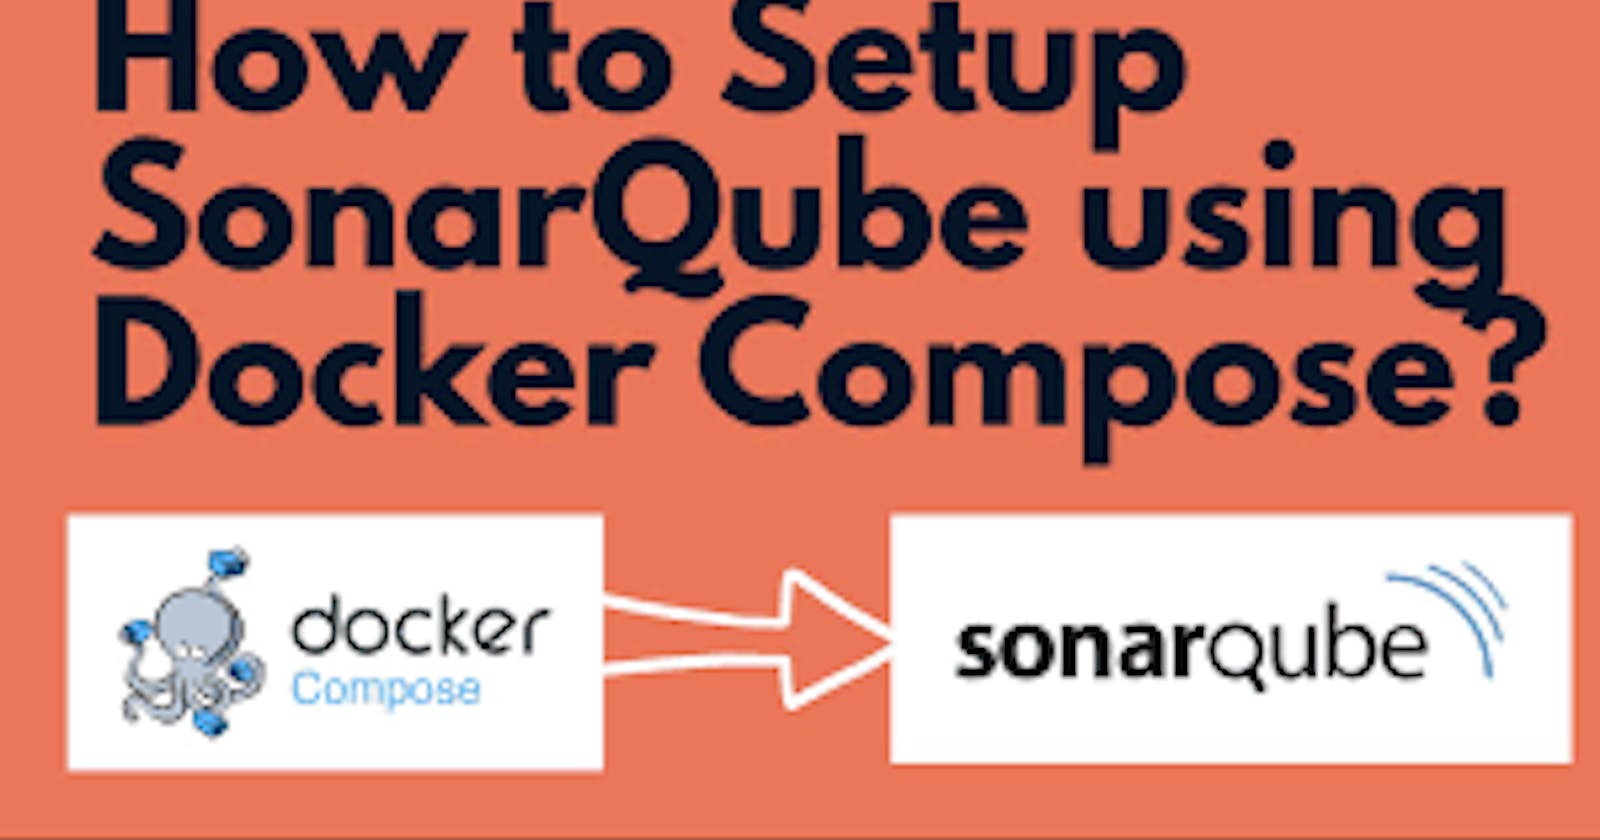 How to run Sonarqube using Docker-compose on AWS Ec2.